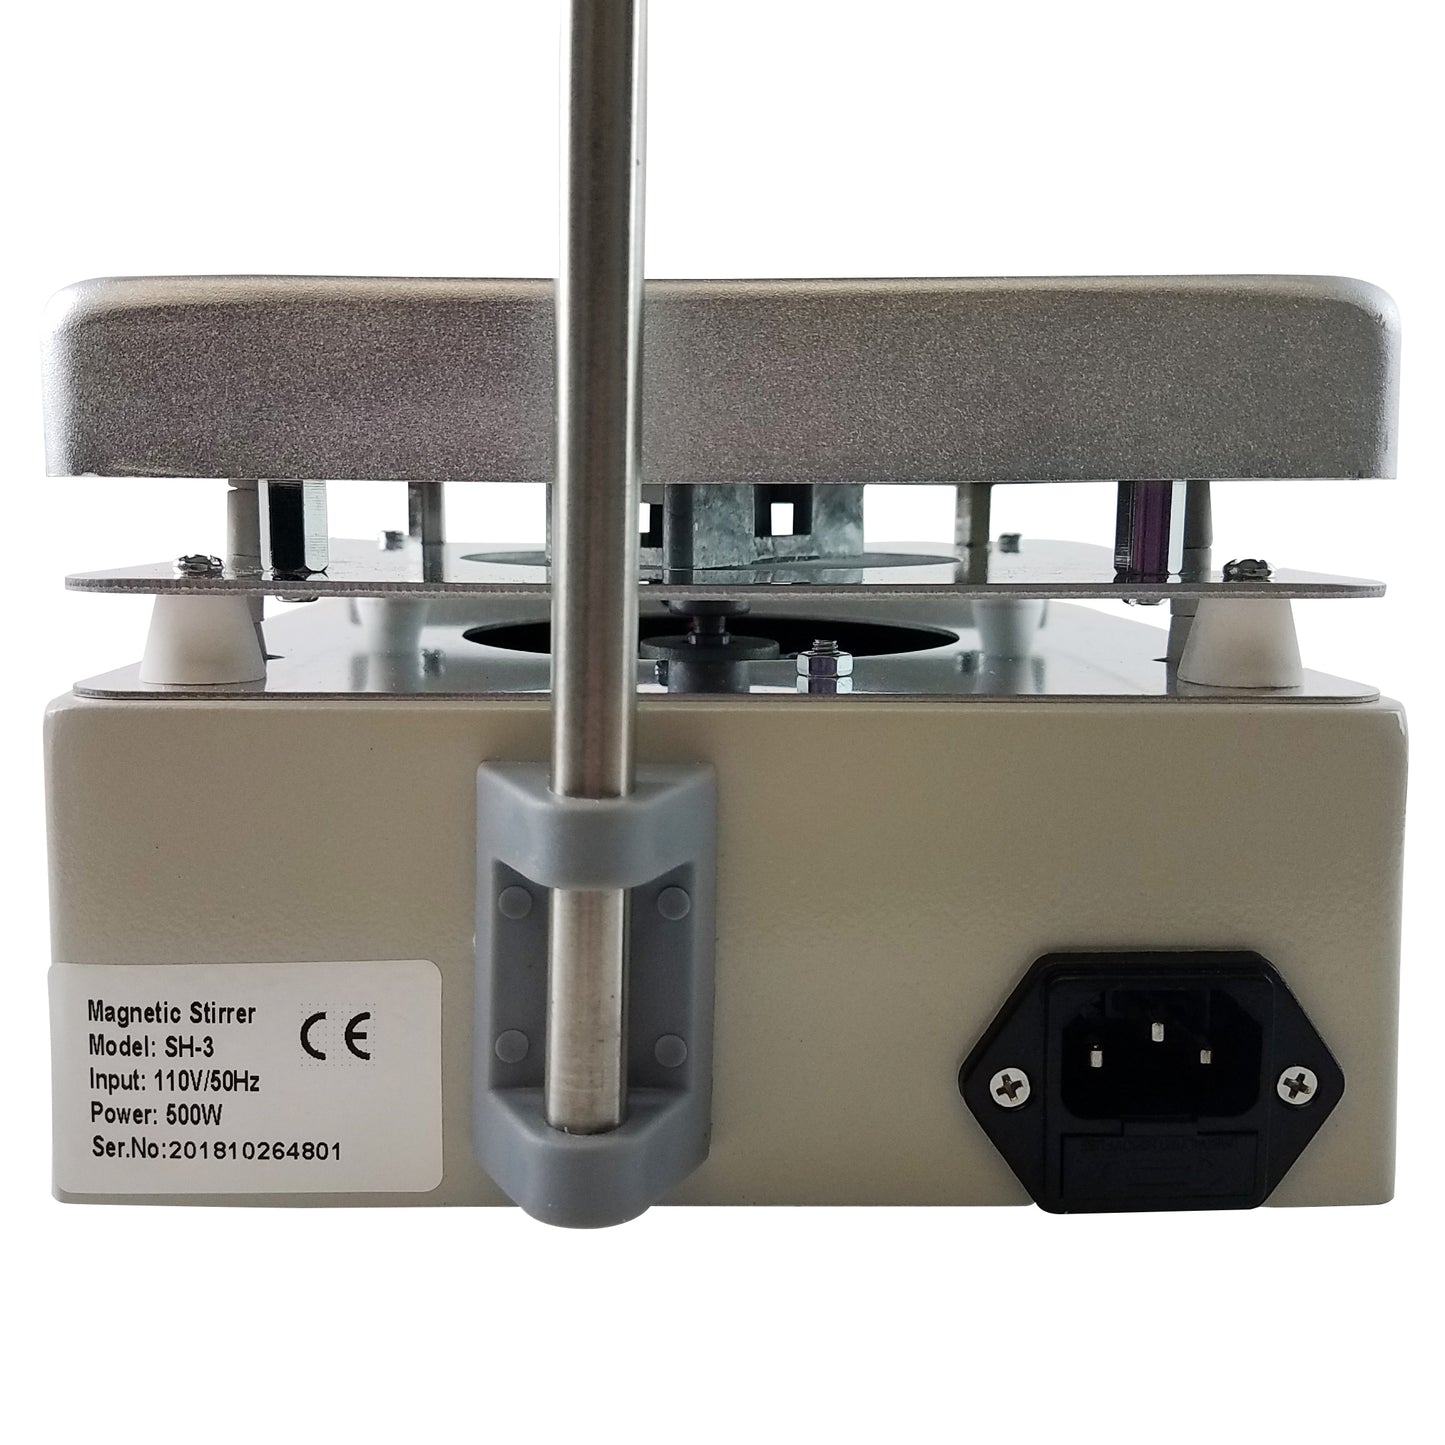 Analog Magnetic Stirrer Hot Plate, 12cm x 12cm